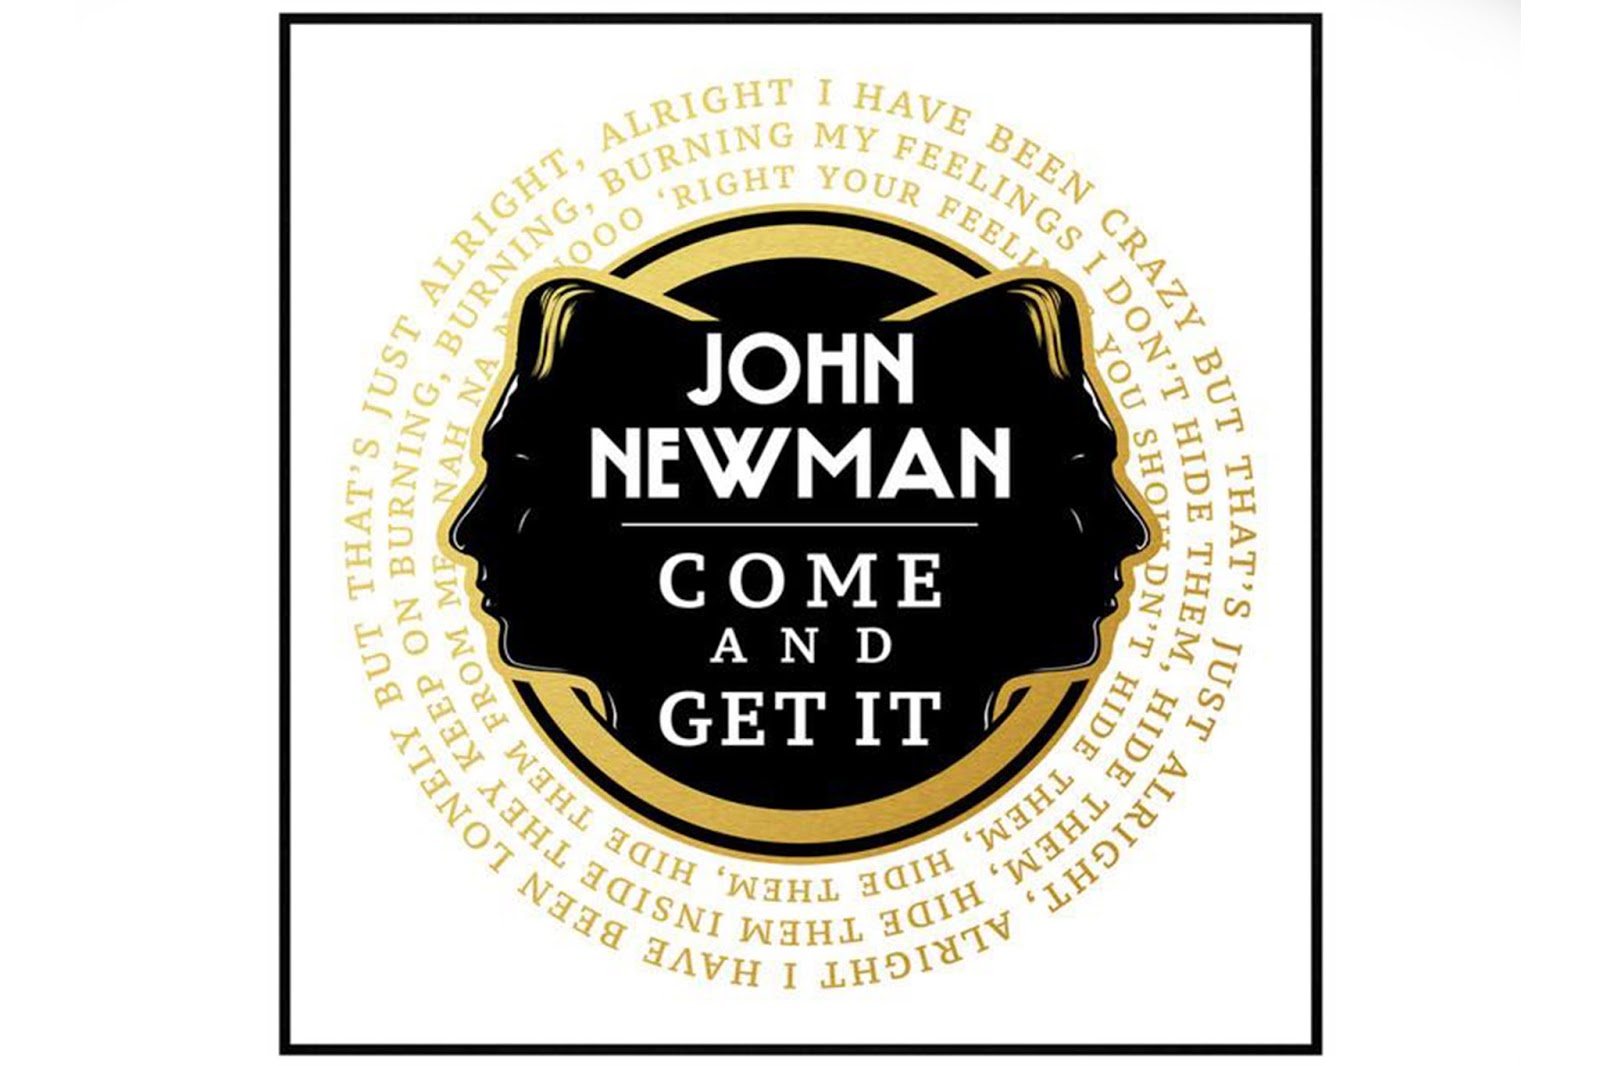 John Newman песни. John Newman топоры. John Newman Tribute. Come and get it. Get a new man